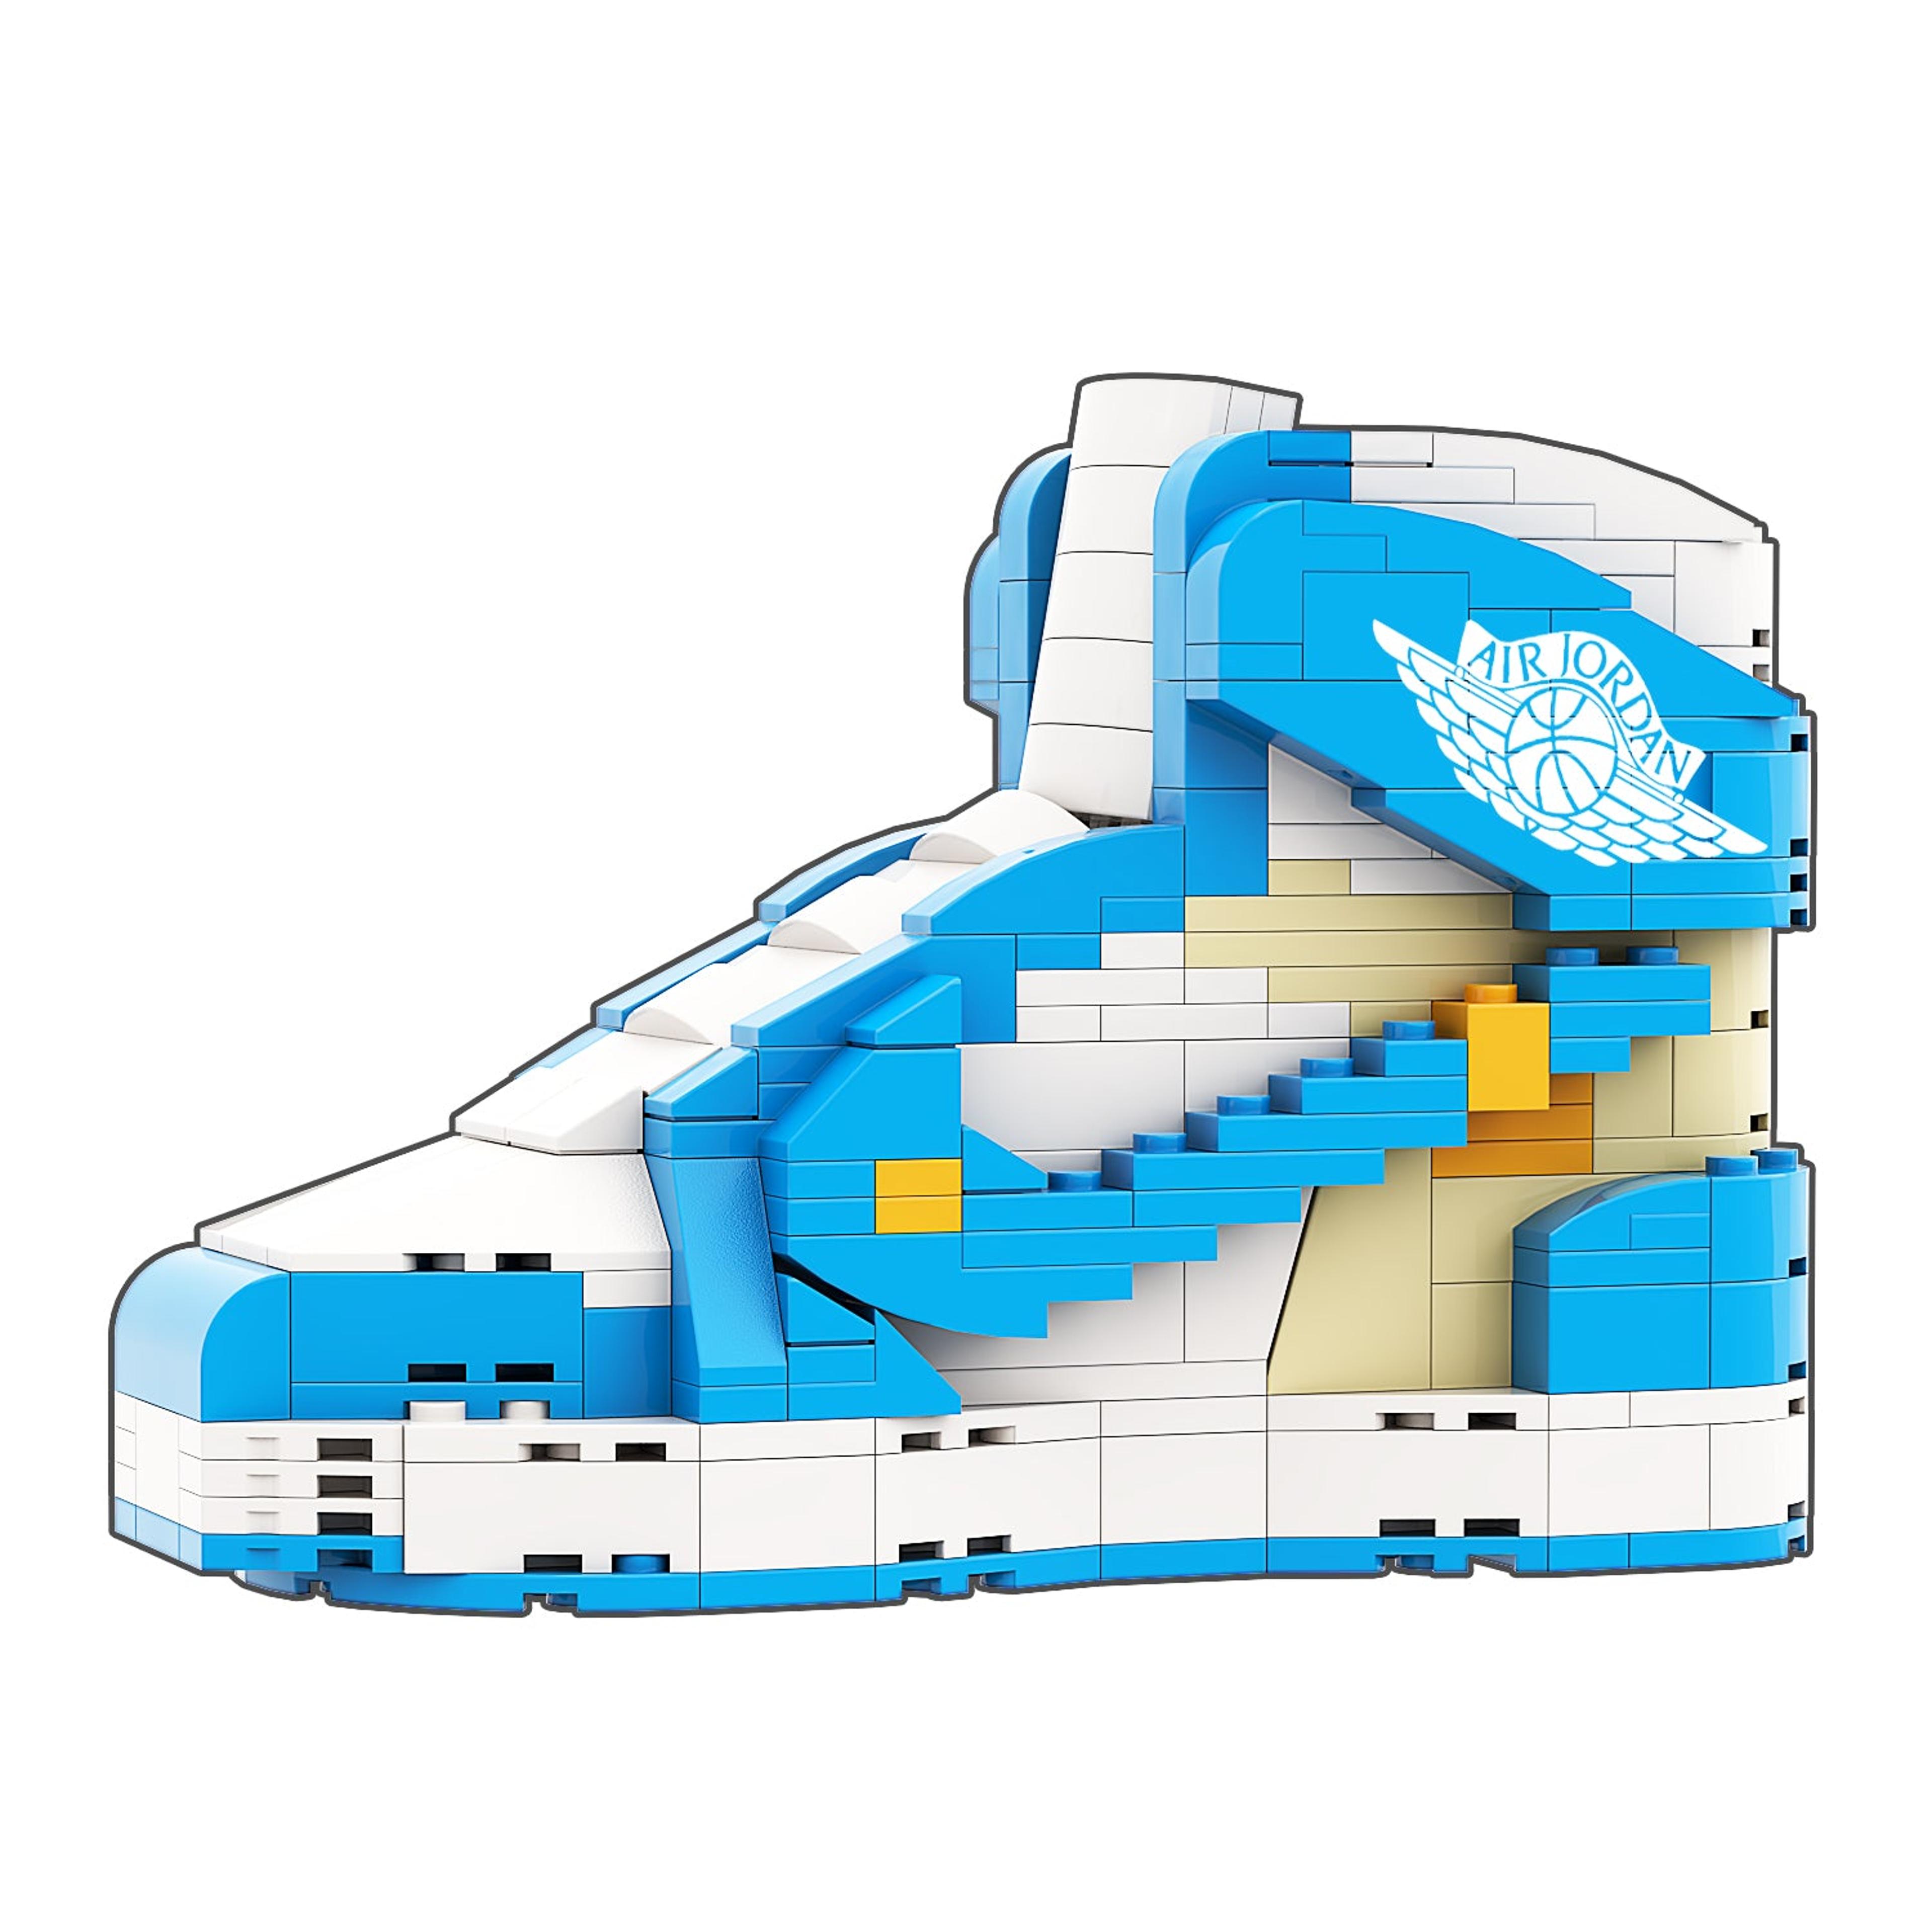 REGULAR "AJ1 Off-White UNC" Sneaker Bricks with Mini Figure